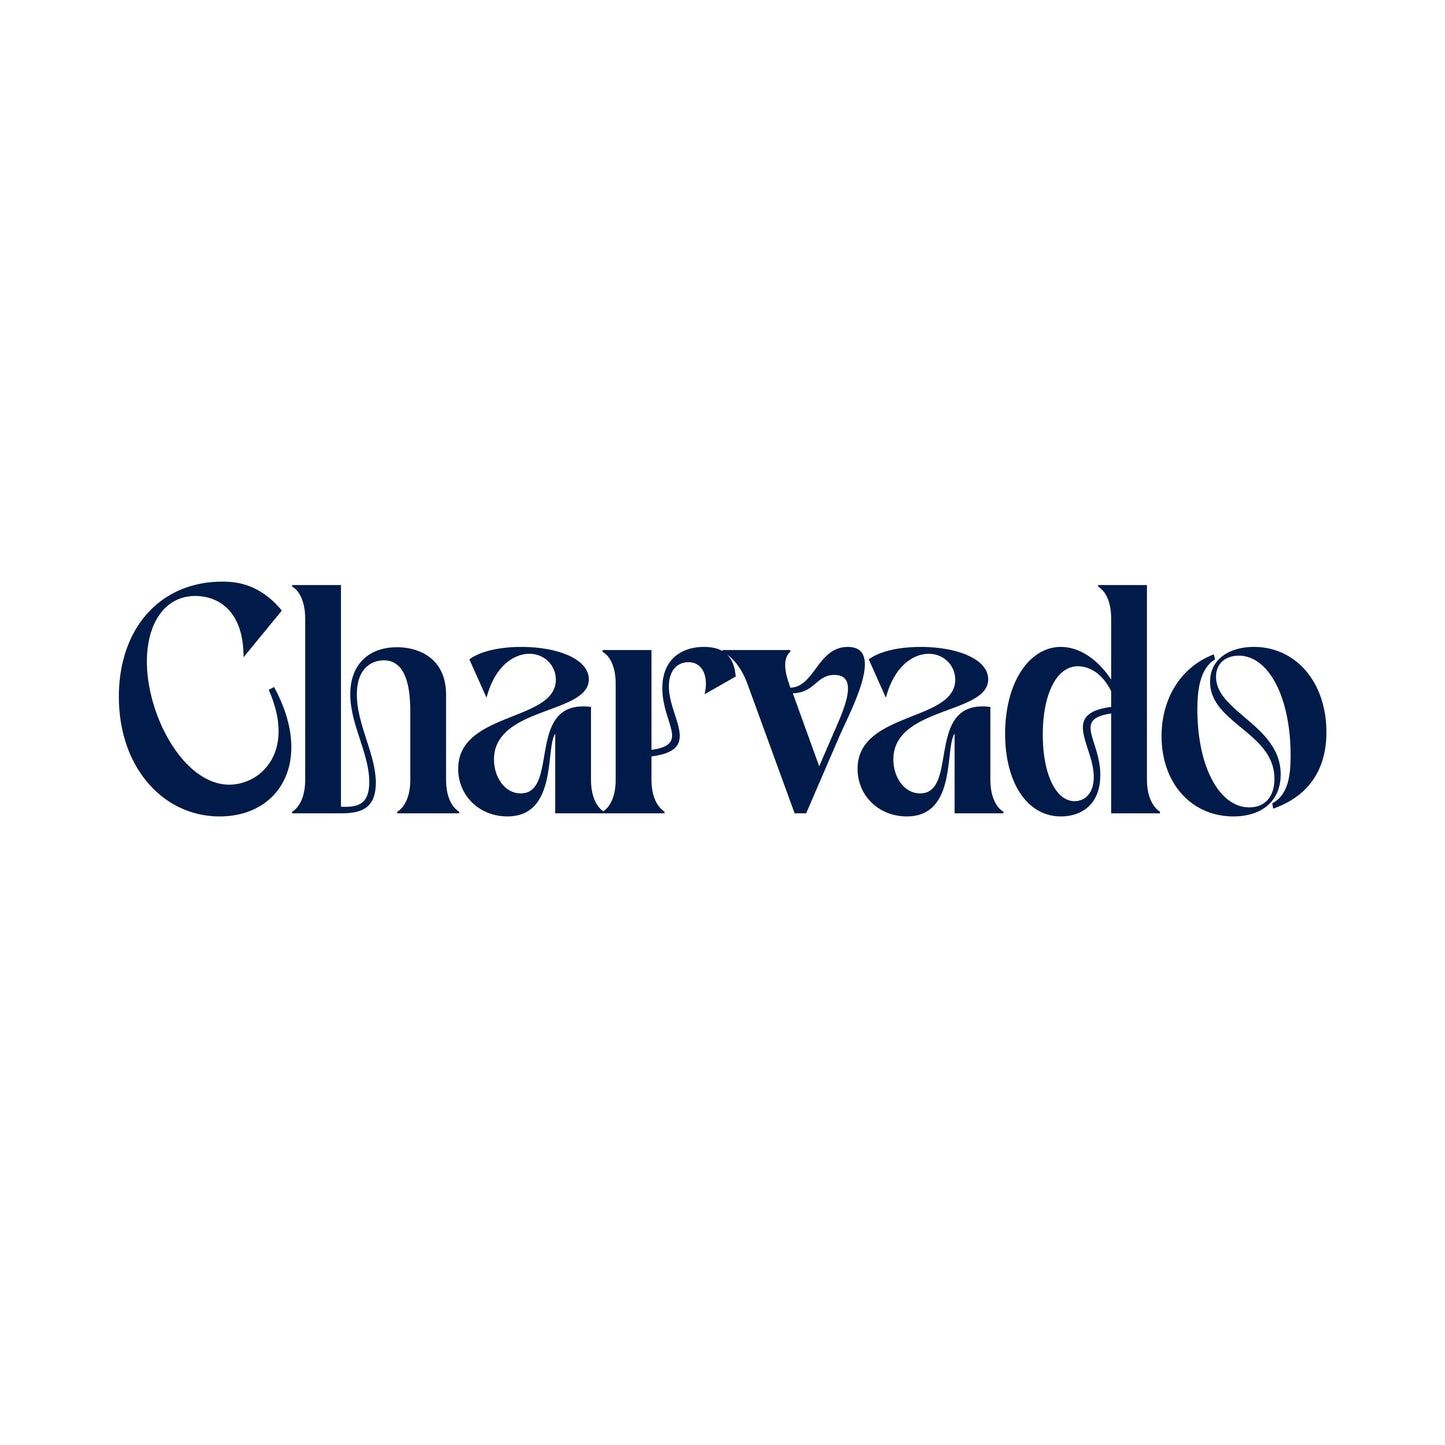 Charvado Bar